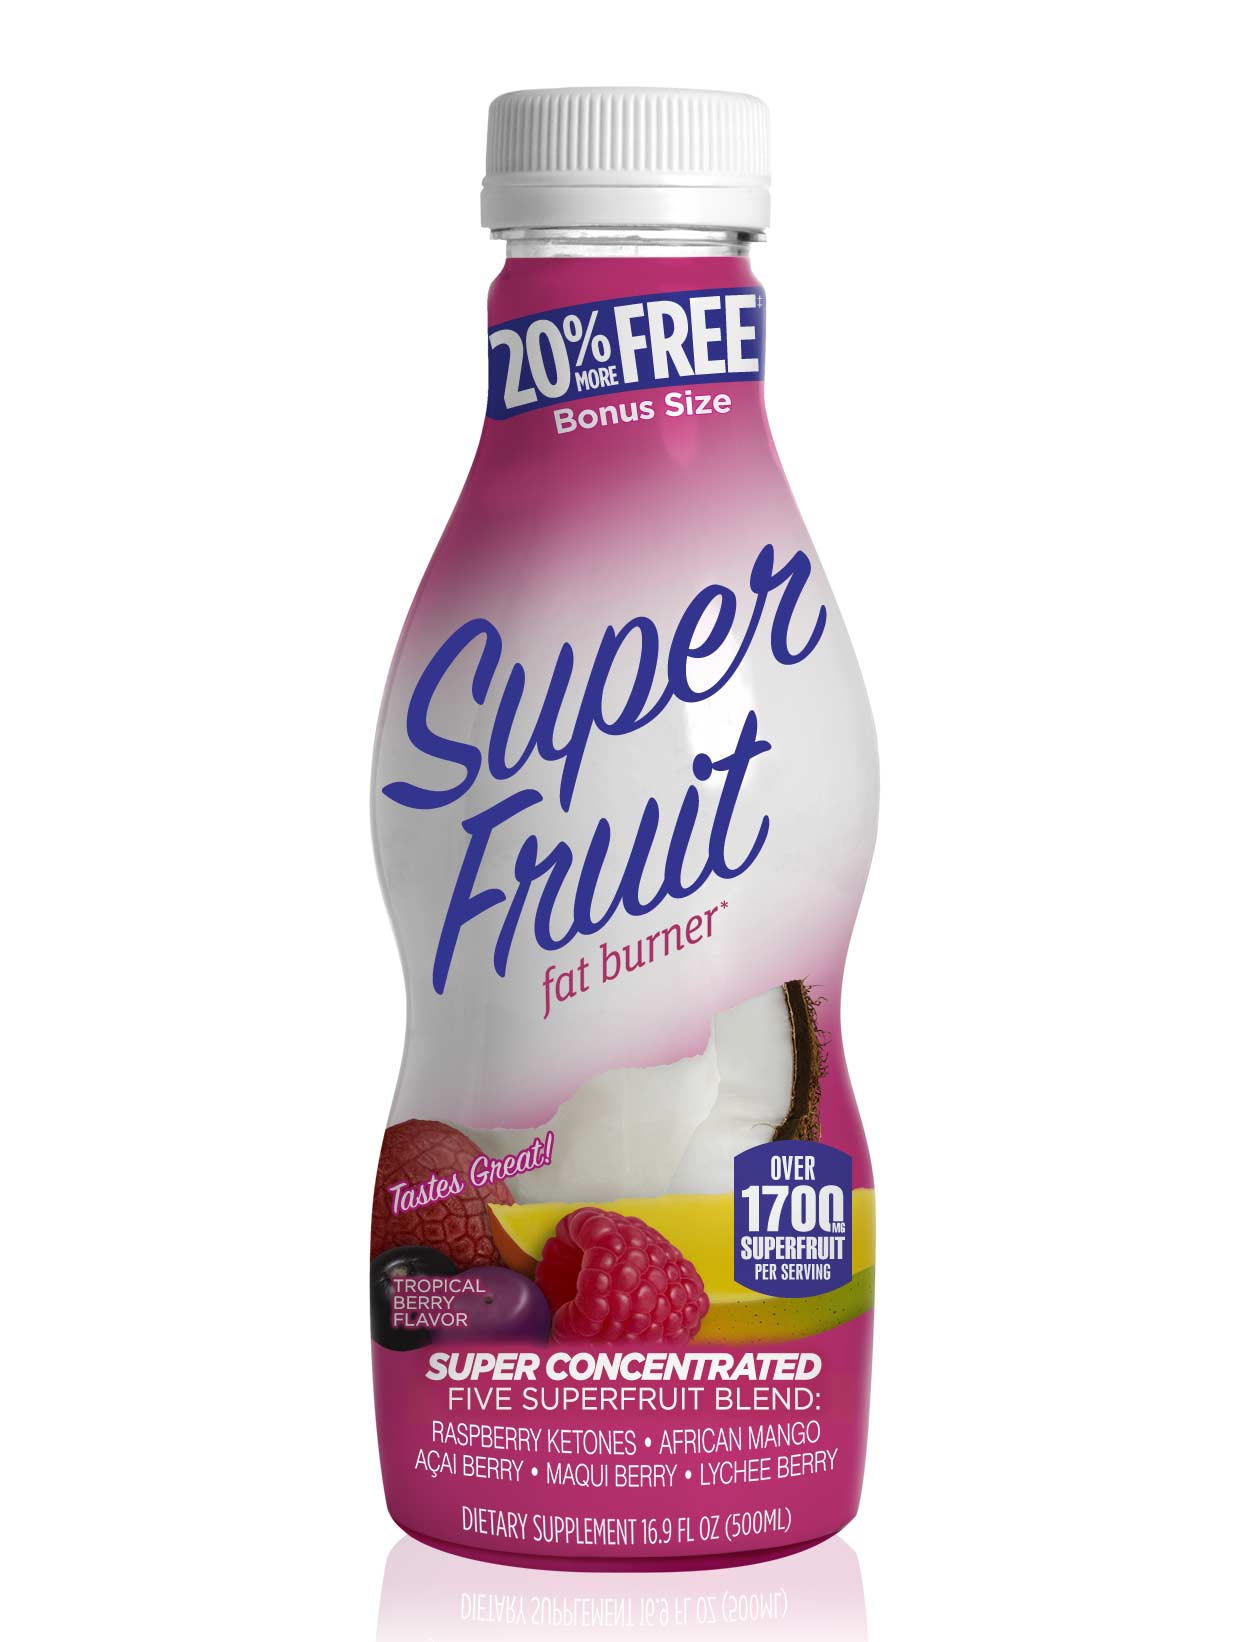 Superfruit Packaging